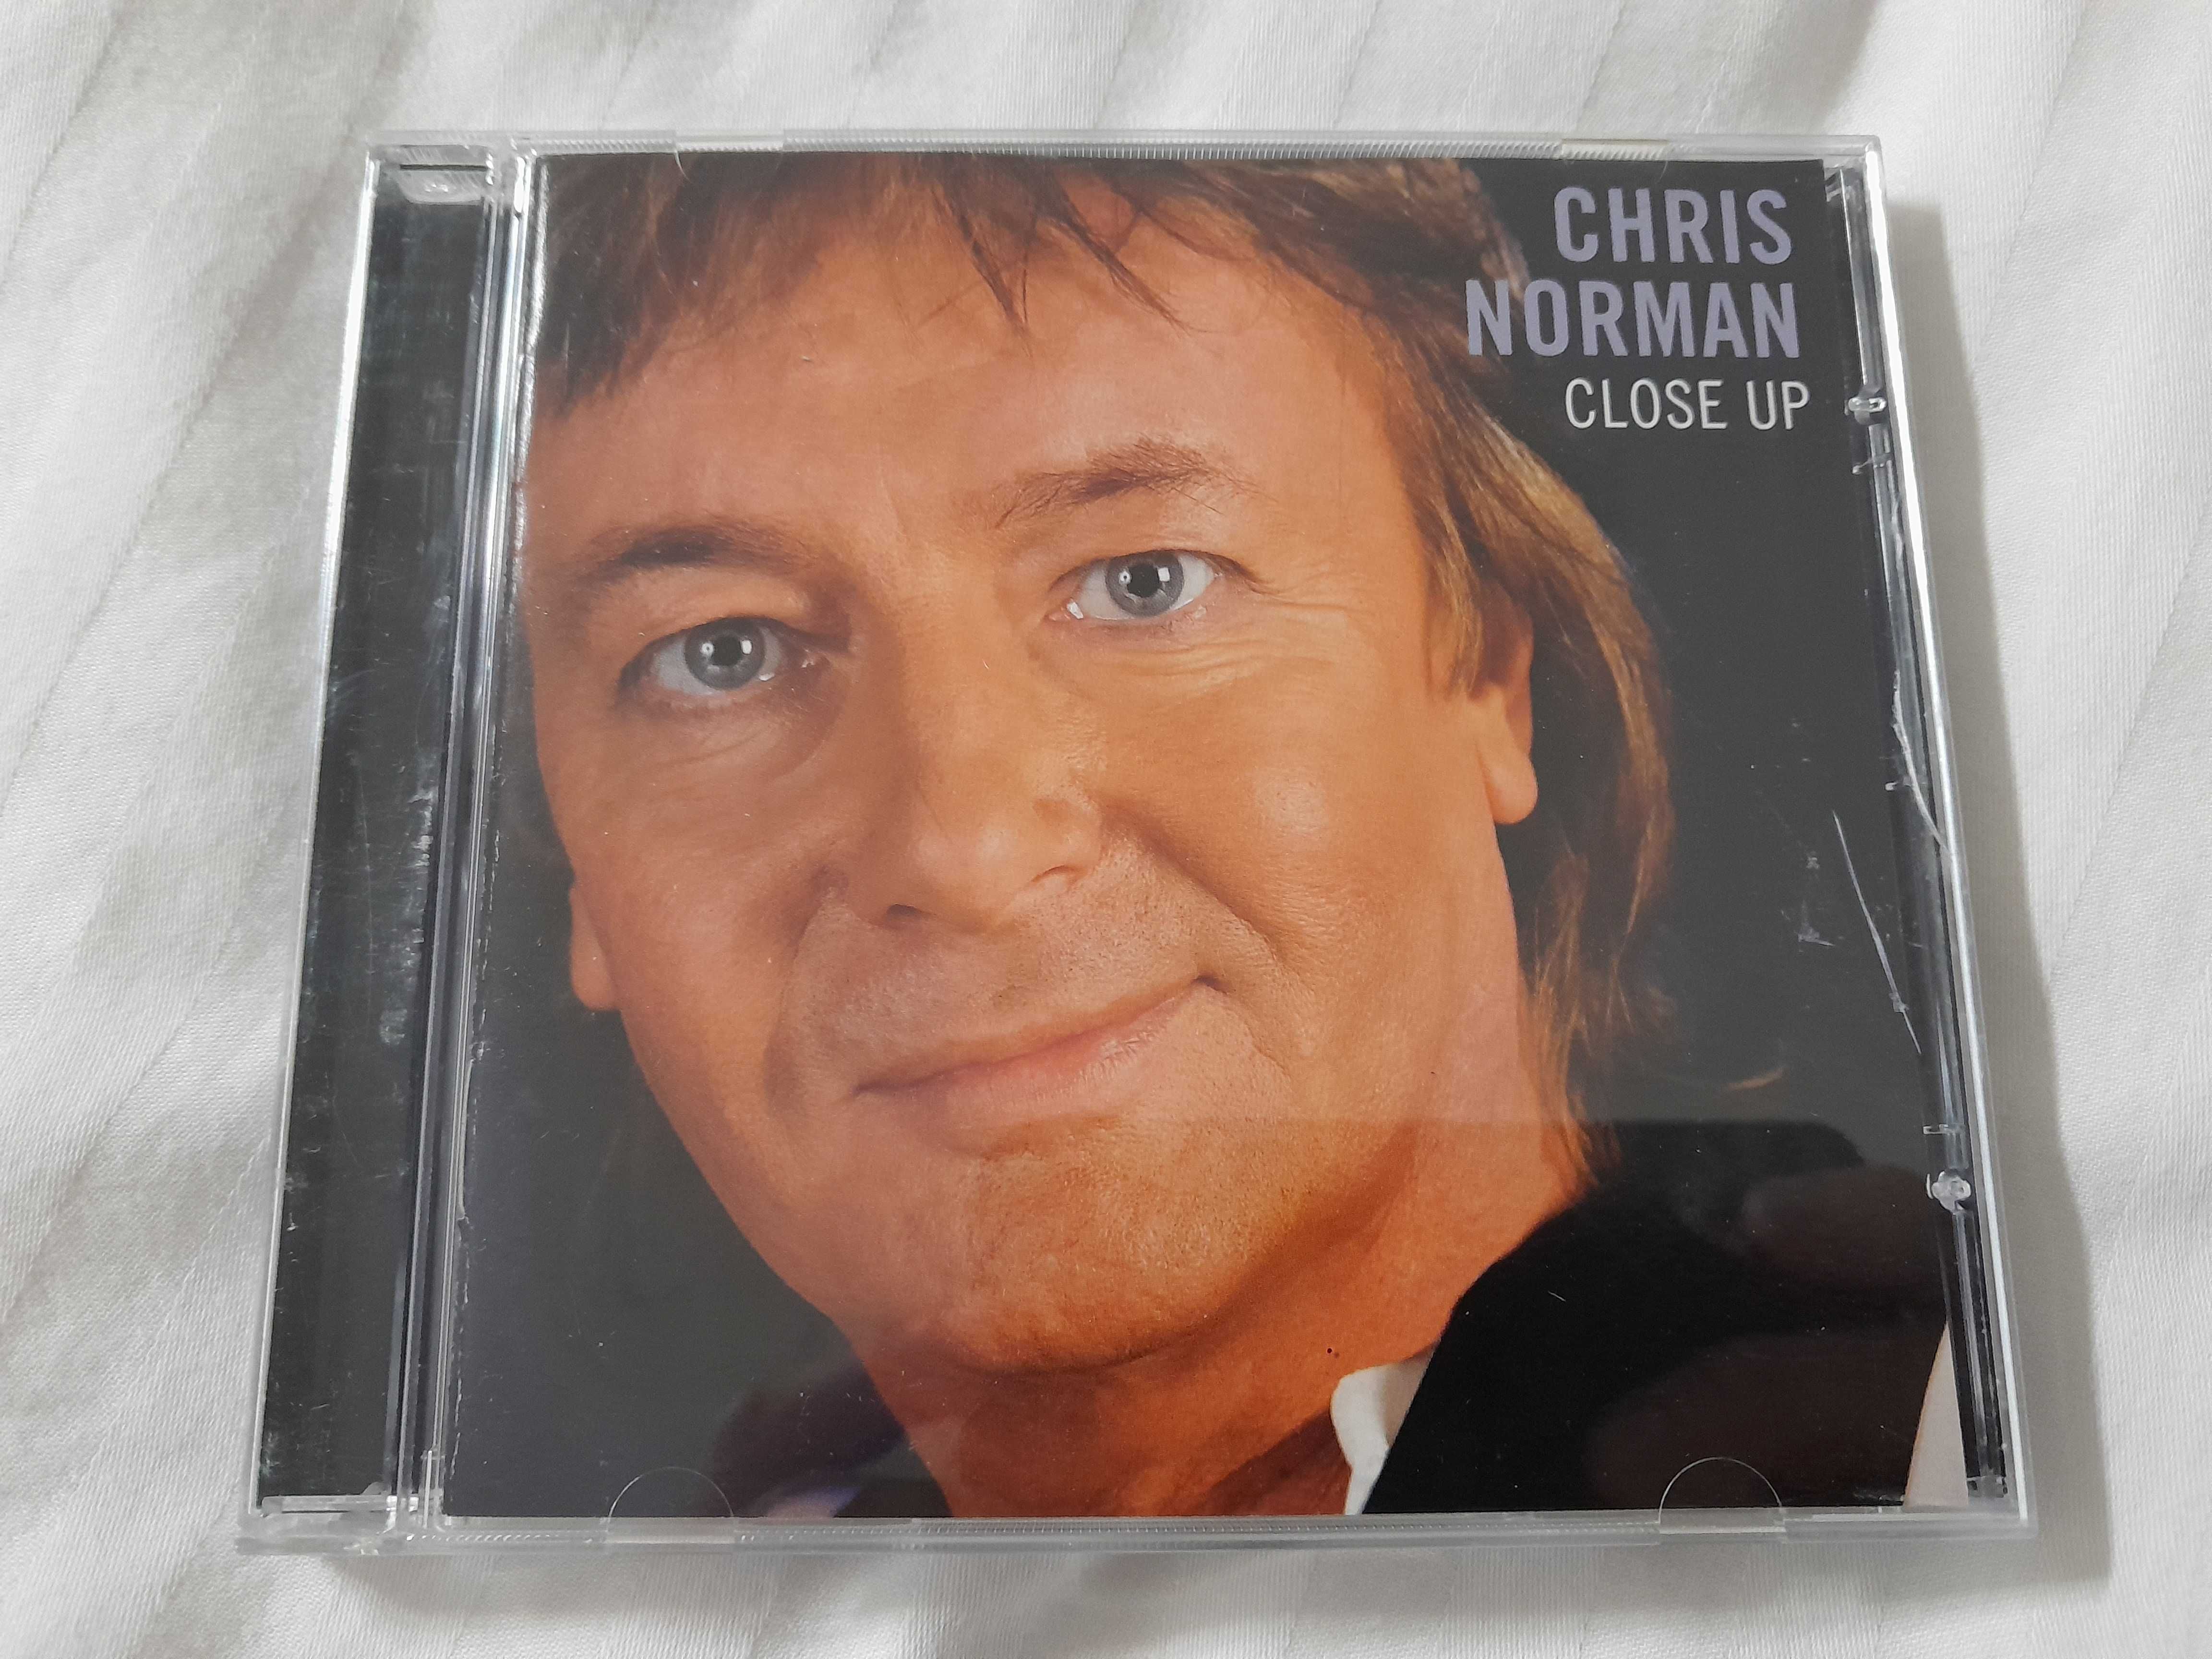 Chris Norman - Close Up - CD 2007 Smokie